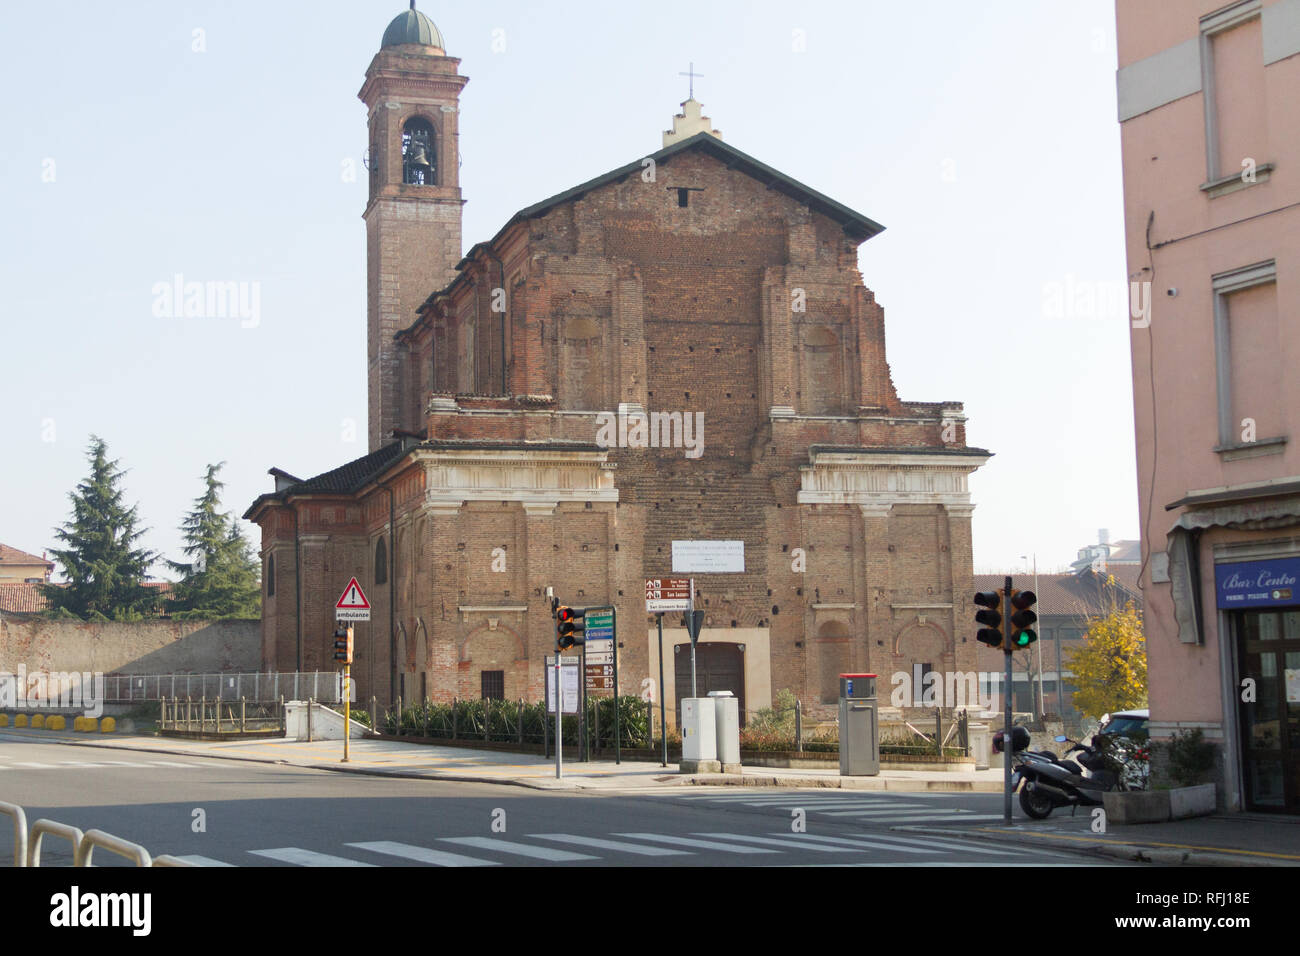 The Salesian church 'Santa Maria delle Grazie' - Holy Mary of the Grace in Pavia. Stock Photo